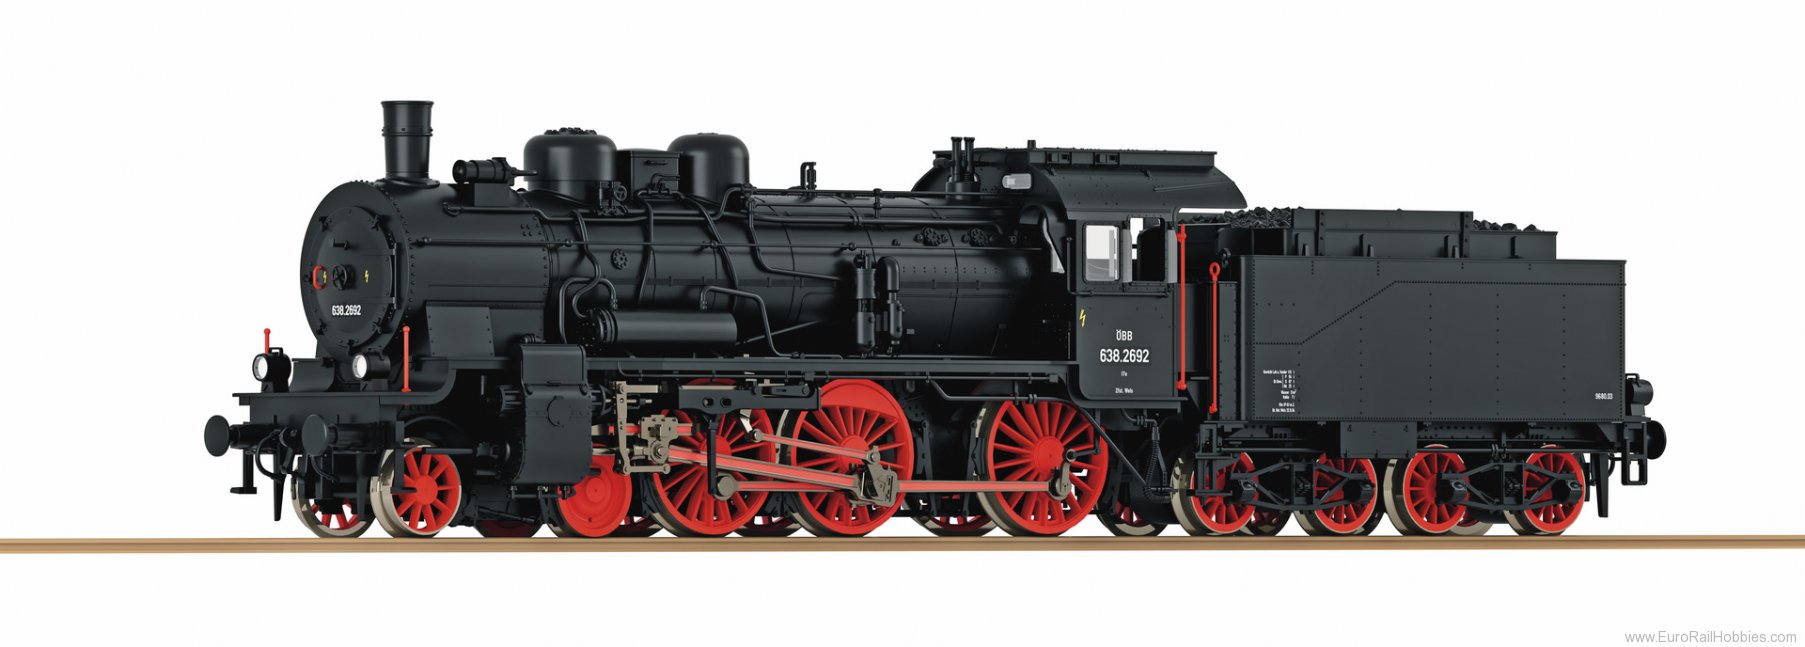 Roco 71394 Steam locomotive 638.2692, ÃBB (DCC Sound)